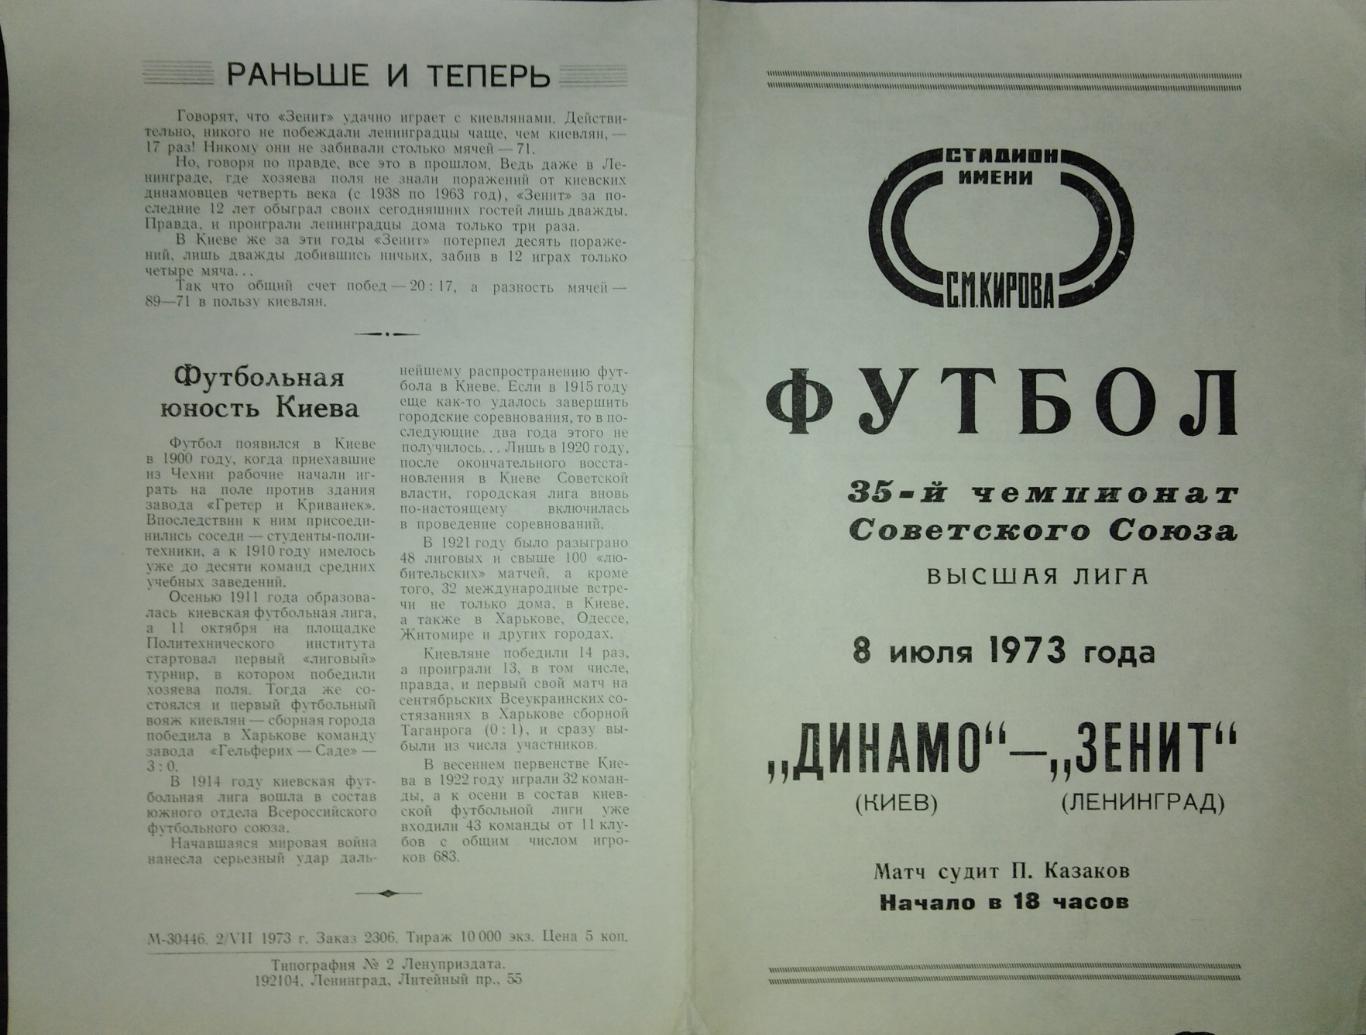 Зенит Ленинград - Динамо Киев - 08.07.1973